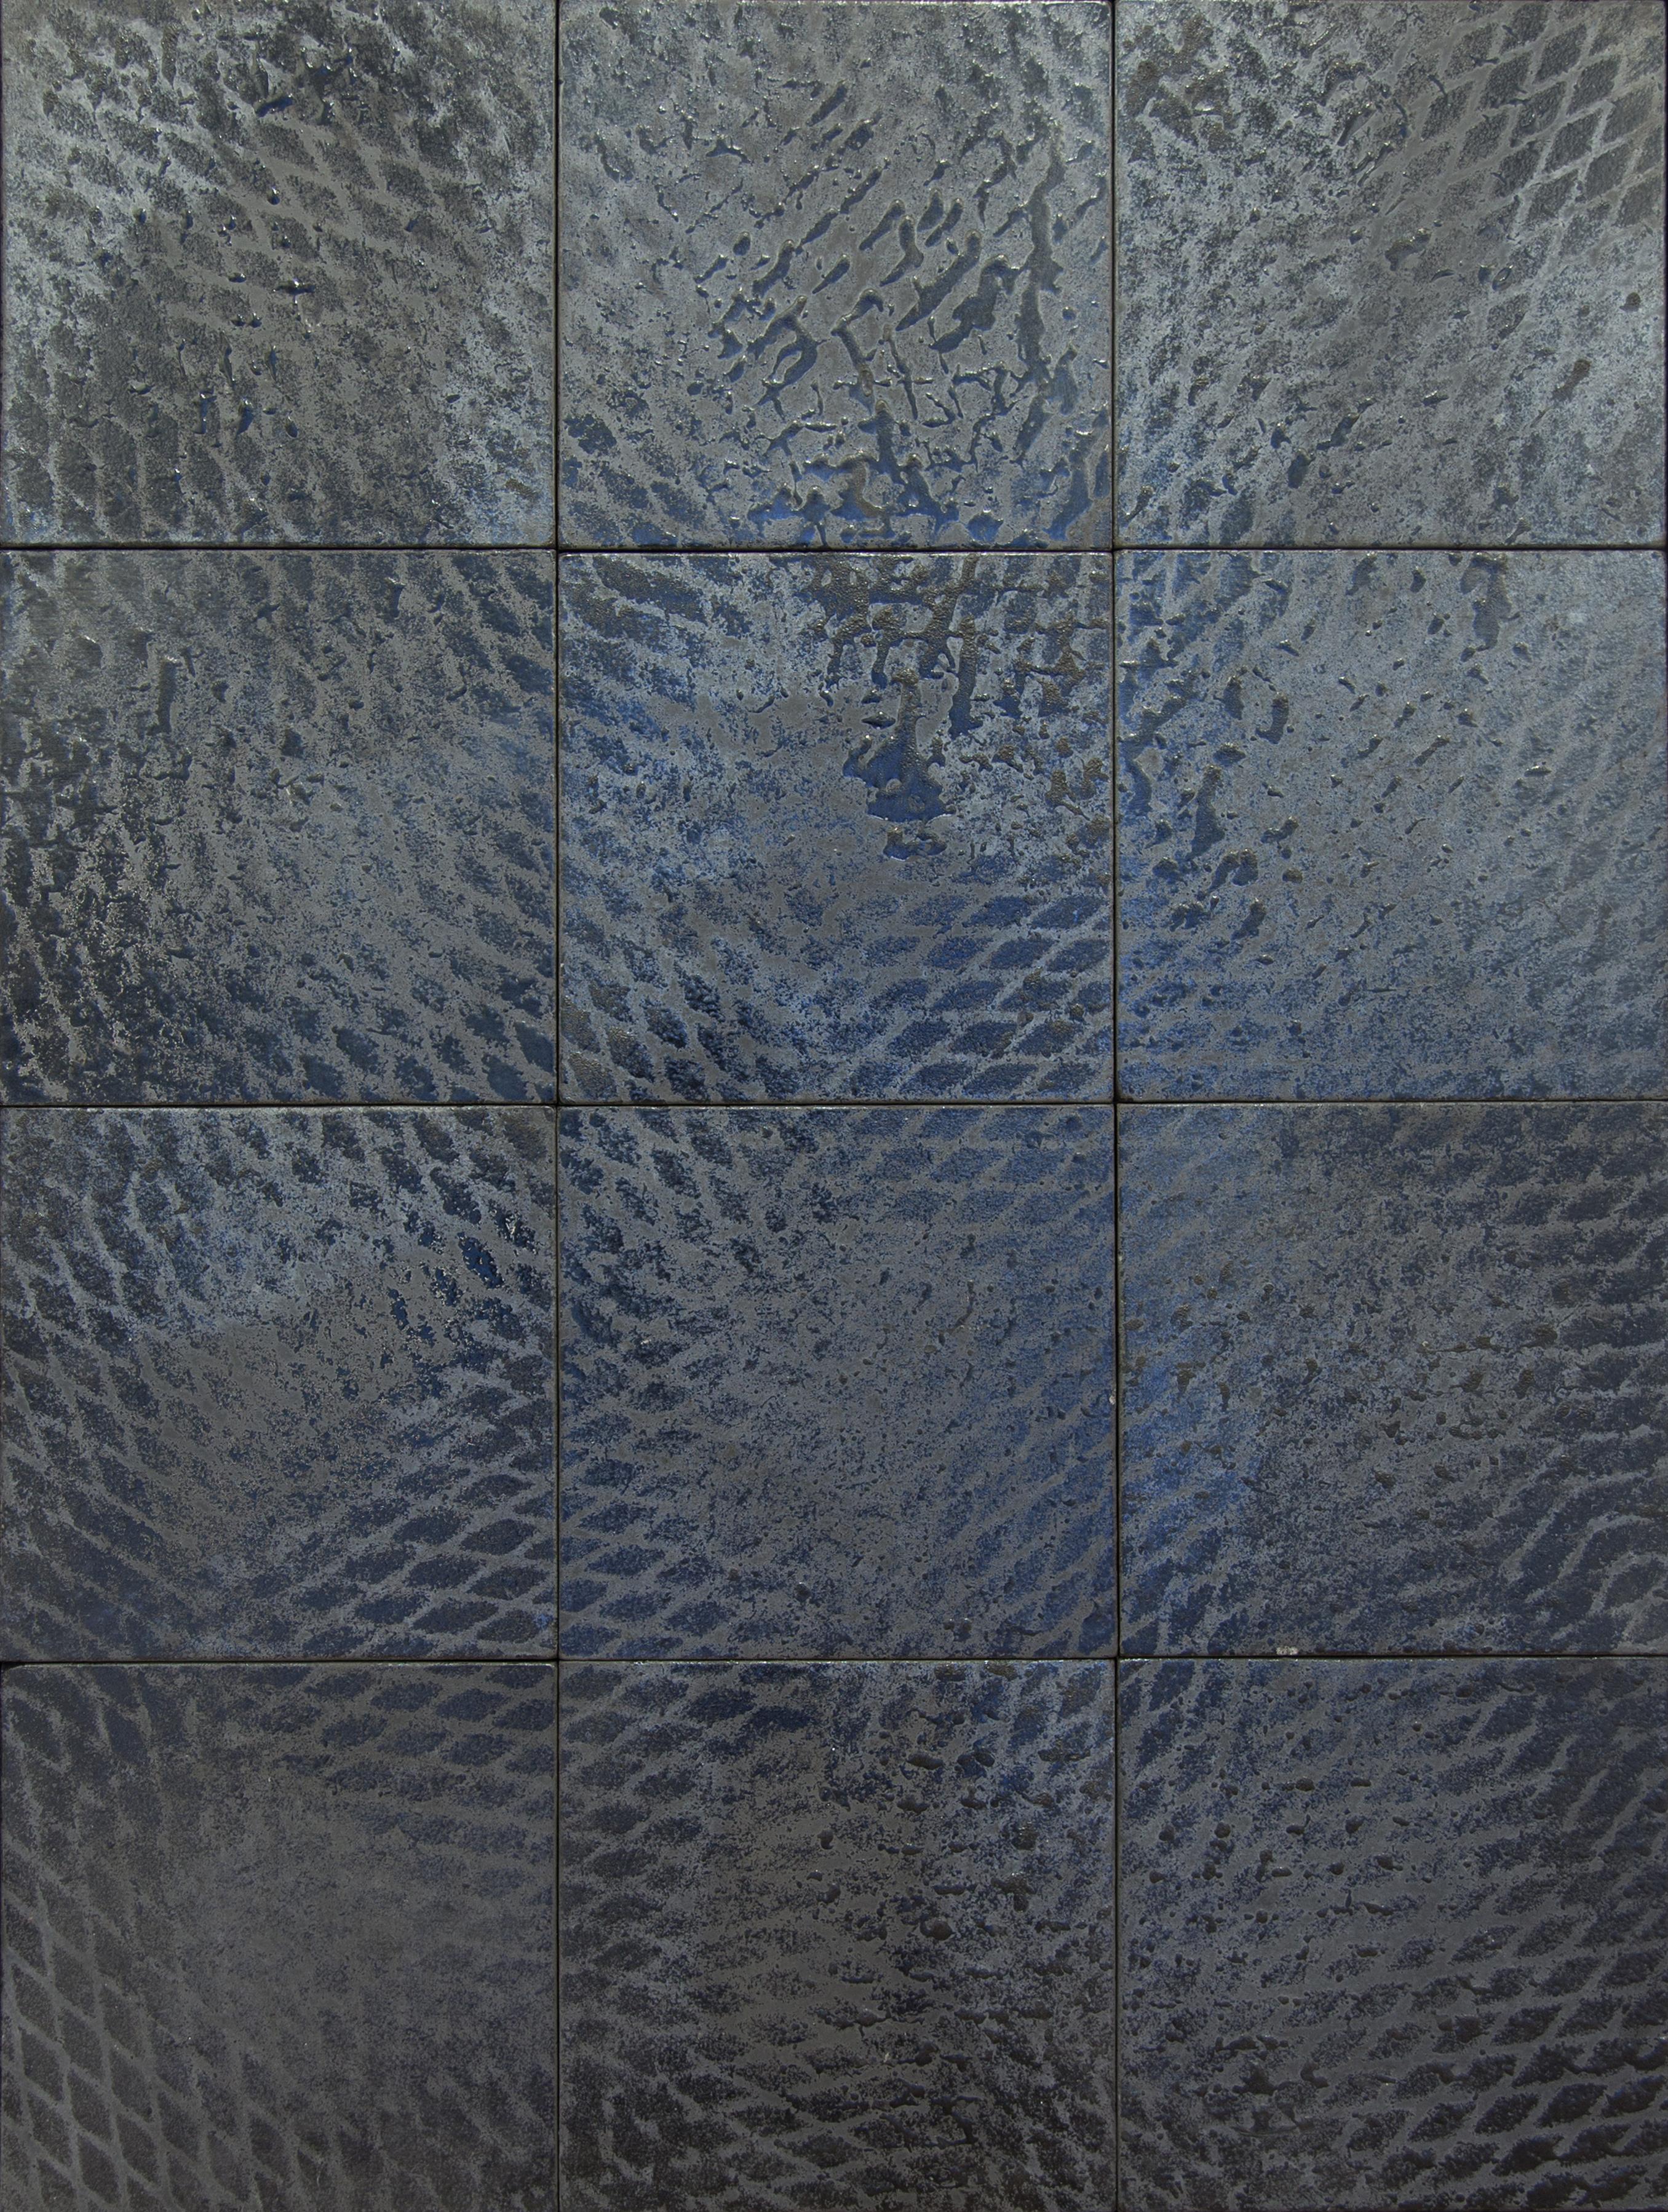 Clemens Wolf Abstract Sculpture – Schwarze, ausziehbare Metallfliesen. Wand-Skulptur